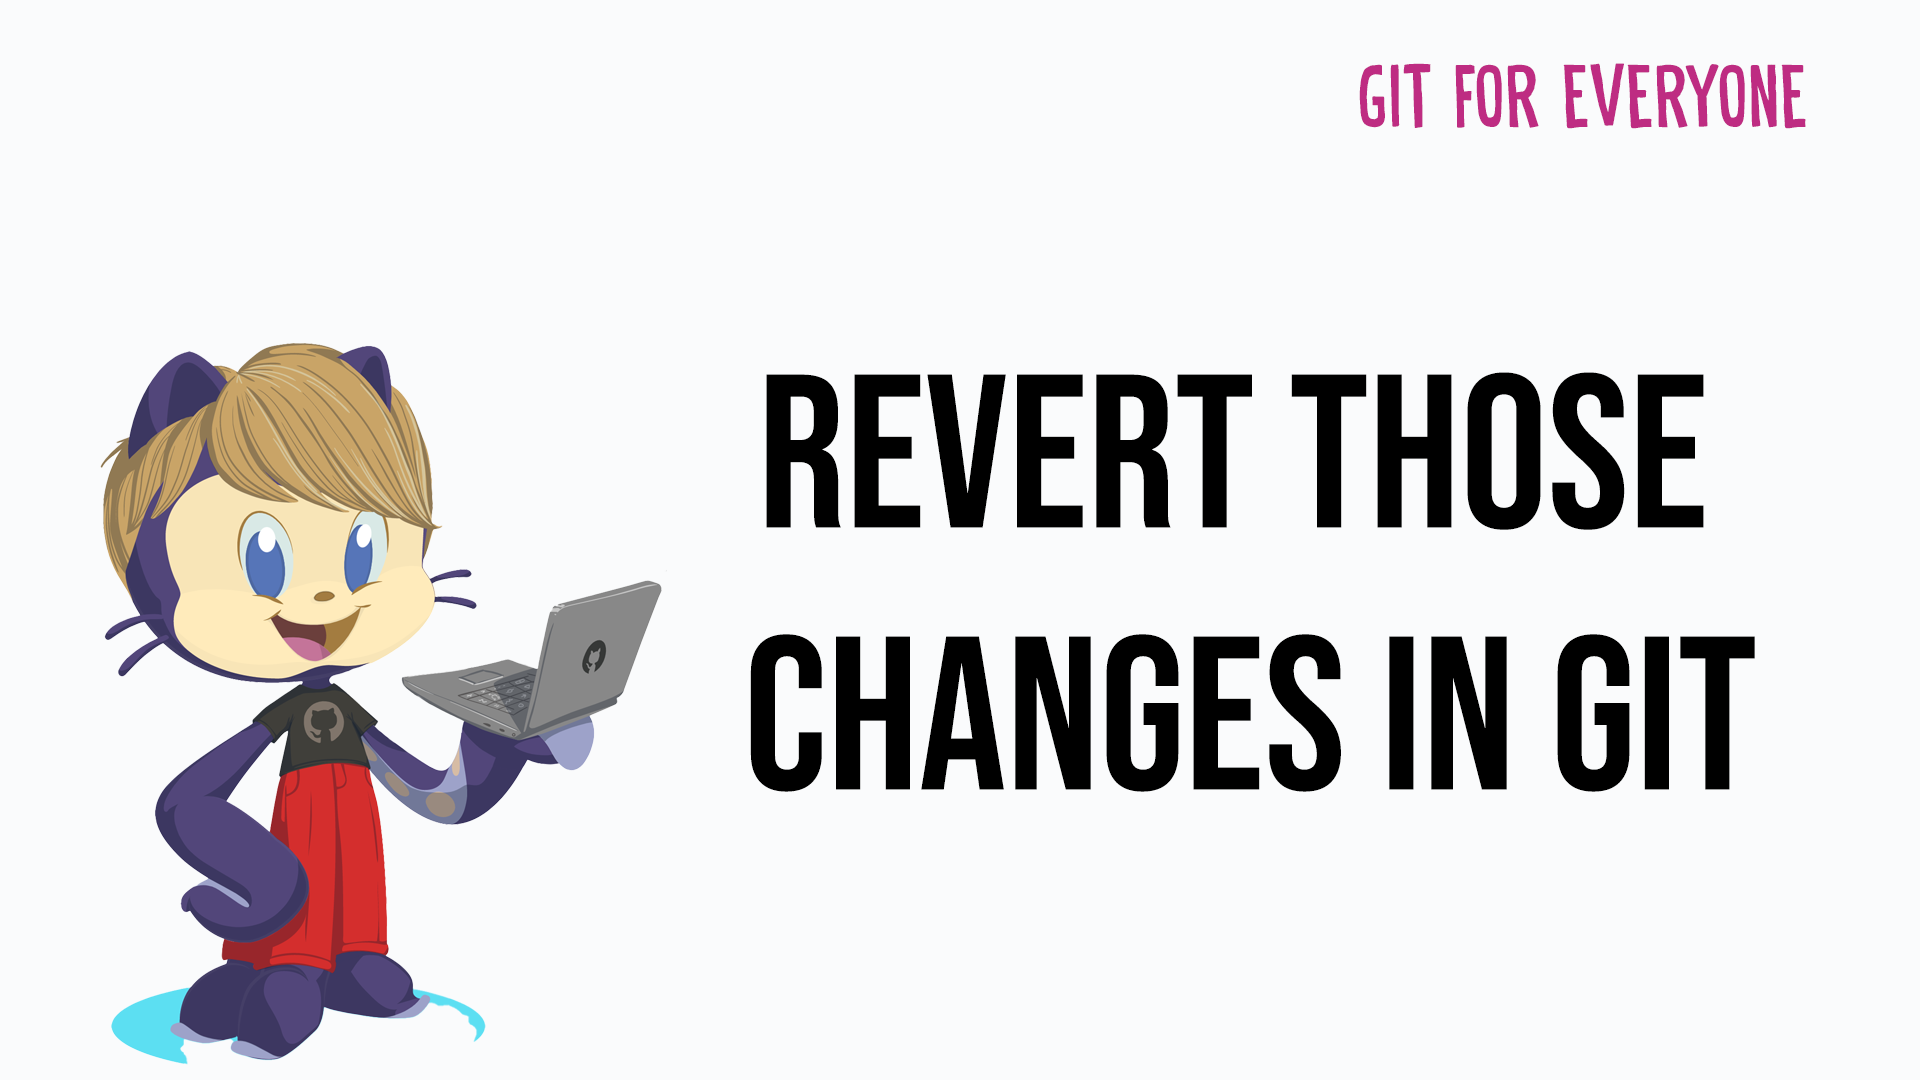 Revert those changes in Git